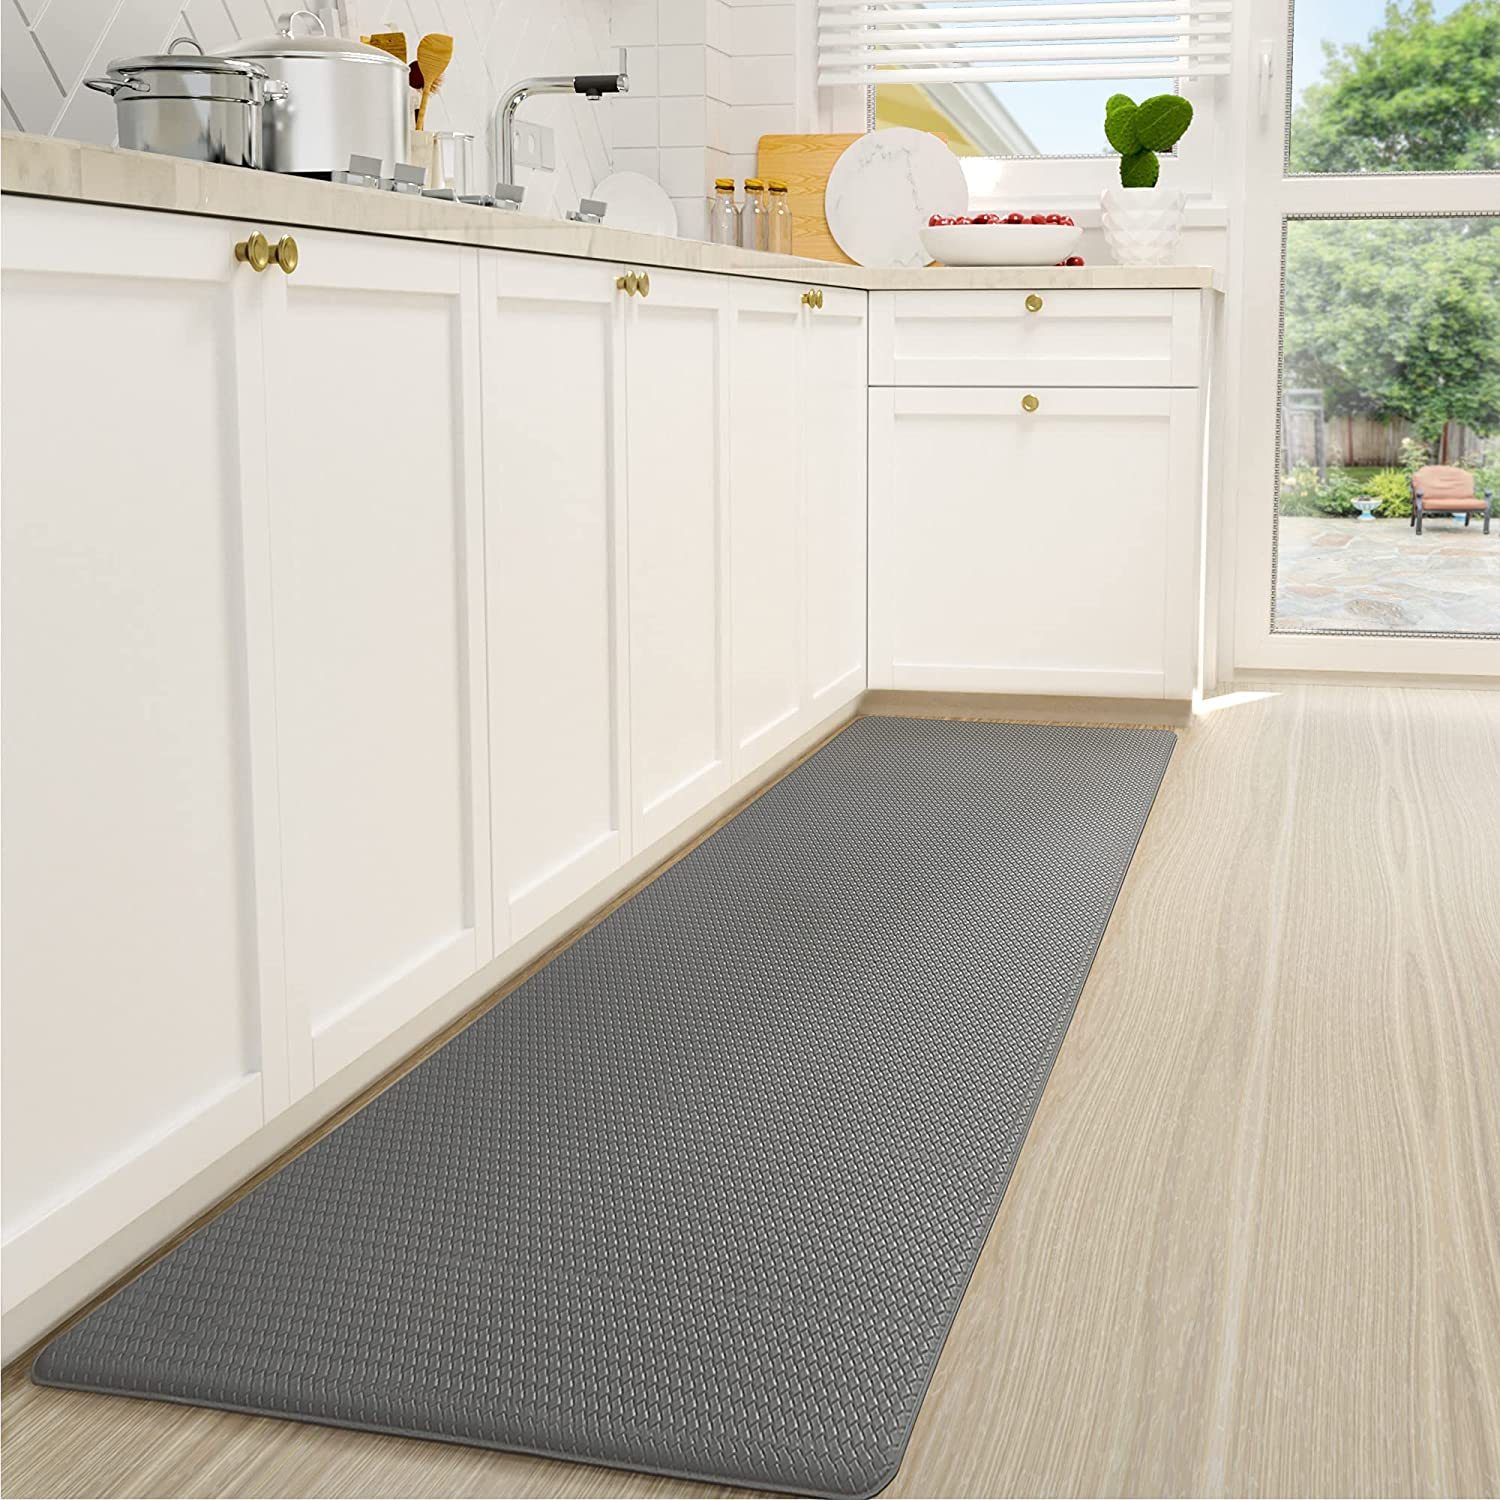 Color&Geometry Kitchen Rugs, Kitchen Runner Rug Kitchen Floor Mat